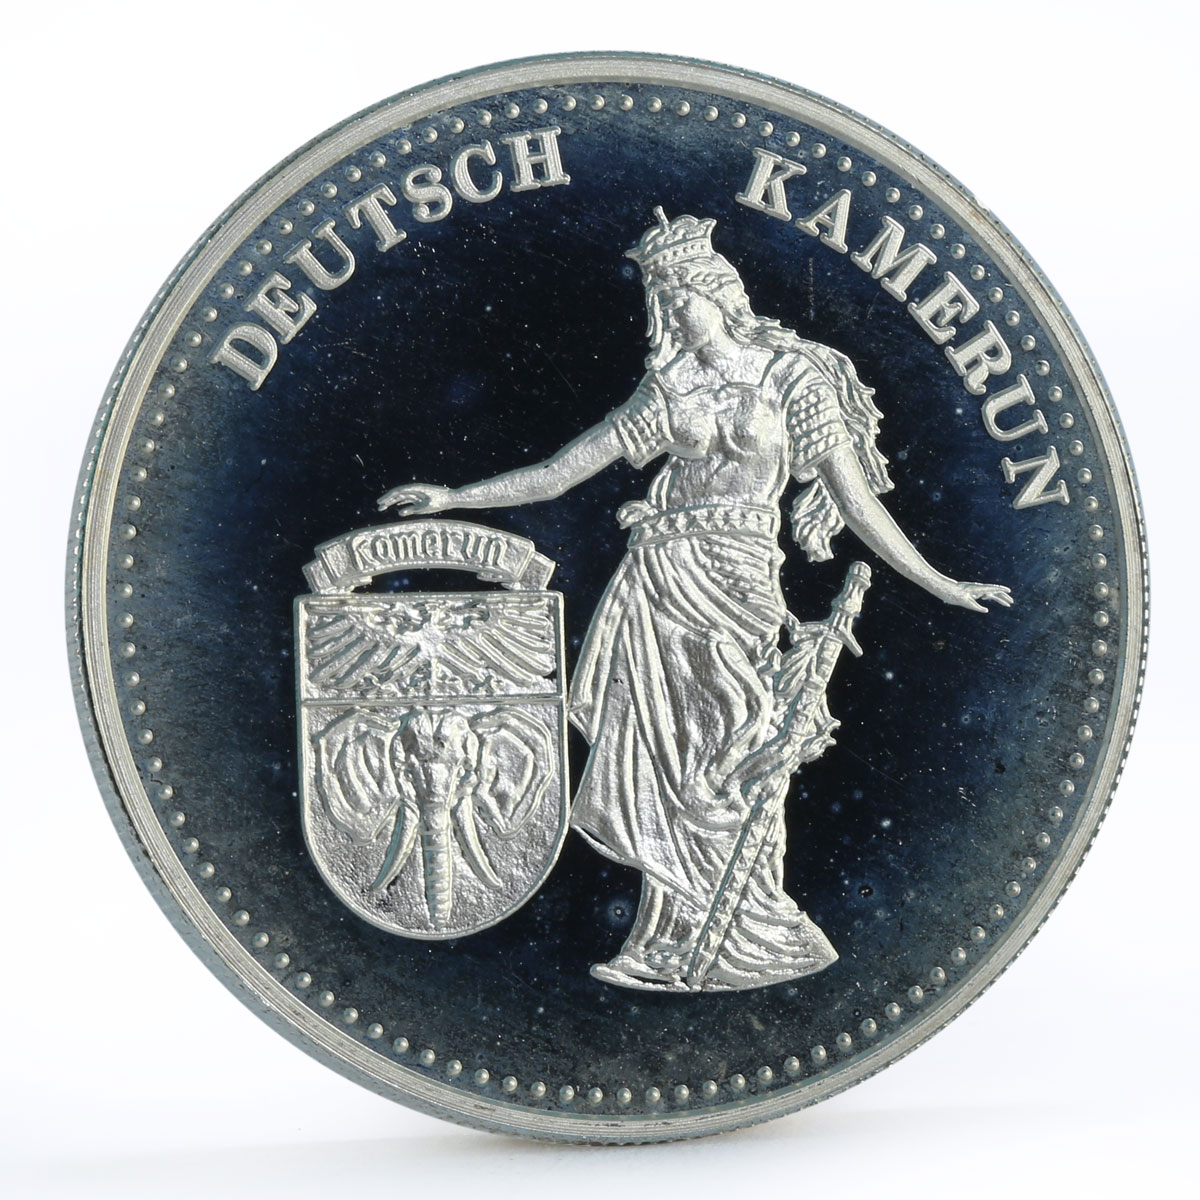 Palau 5 dollars International Coins series German Cameroon silver coin 1999